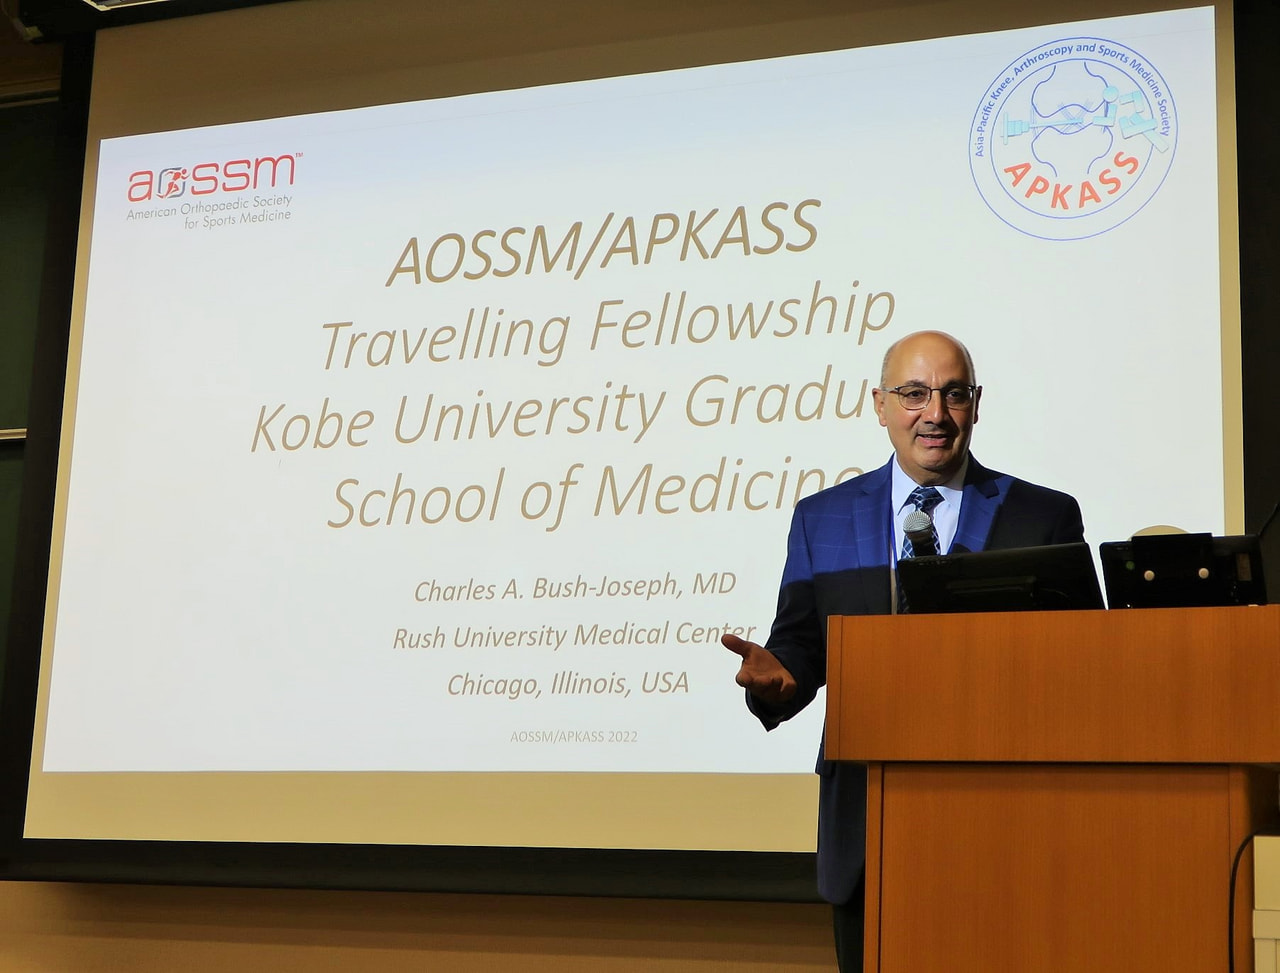 AOSSM Traveling Fellowship の先生方が神戸大学を訪問されました。